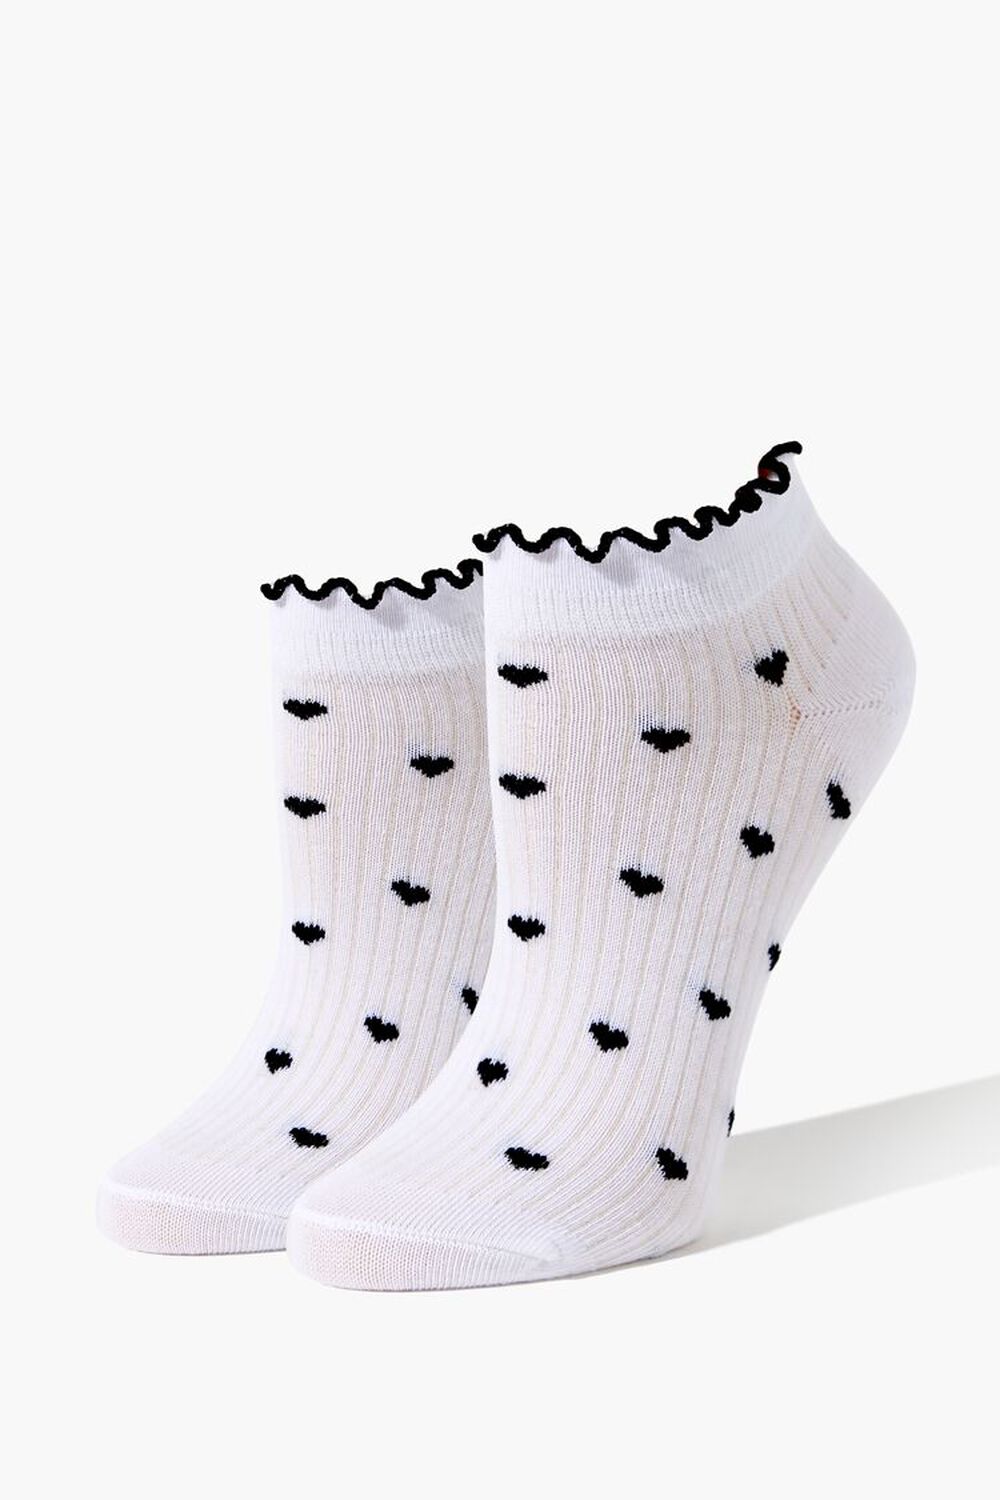 Heart Print Ankle Socks, image 1